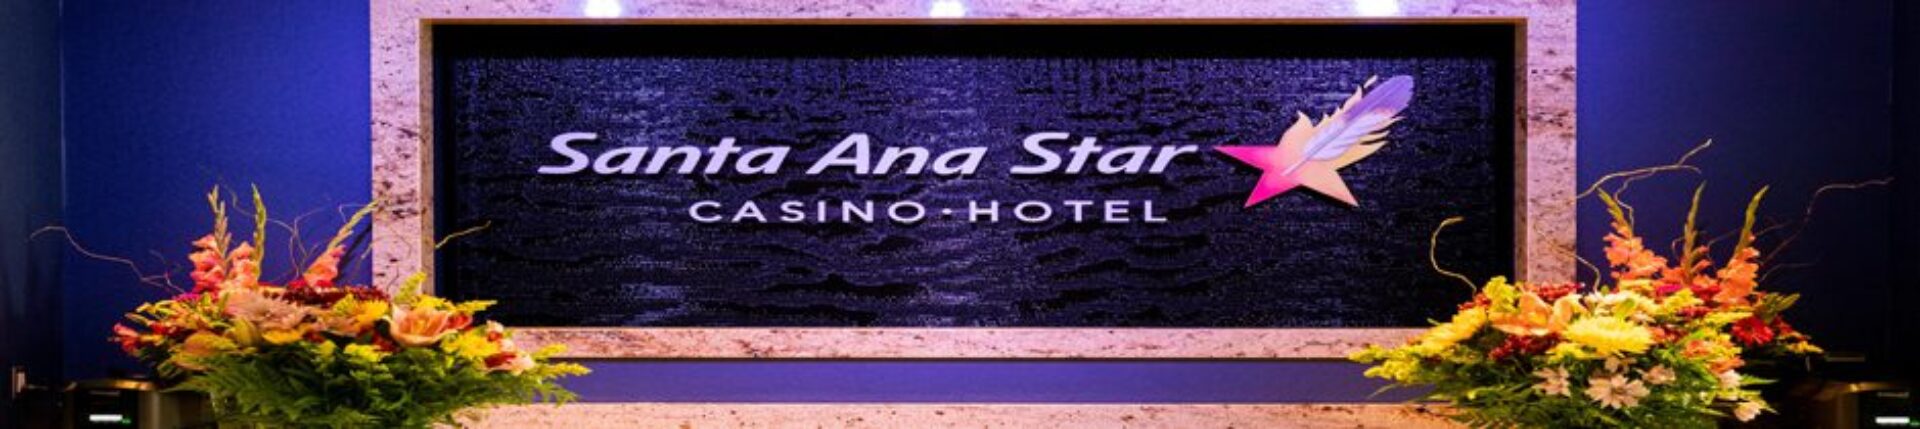 santa ana star casino hotel website banner